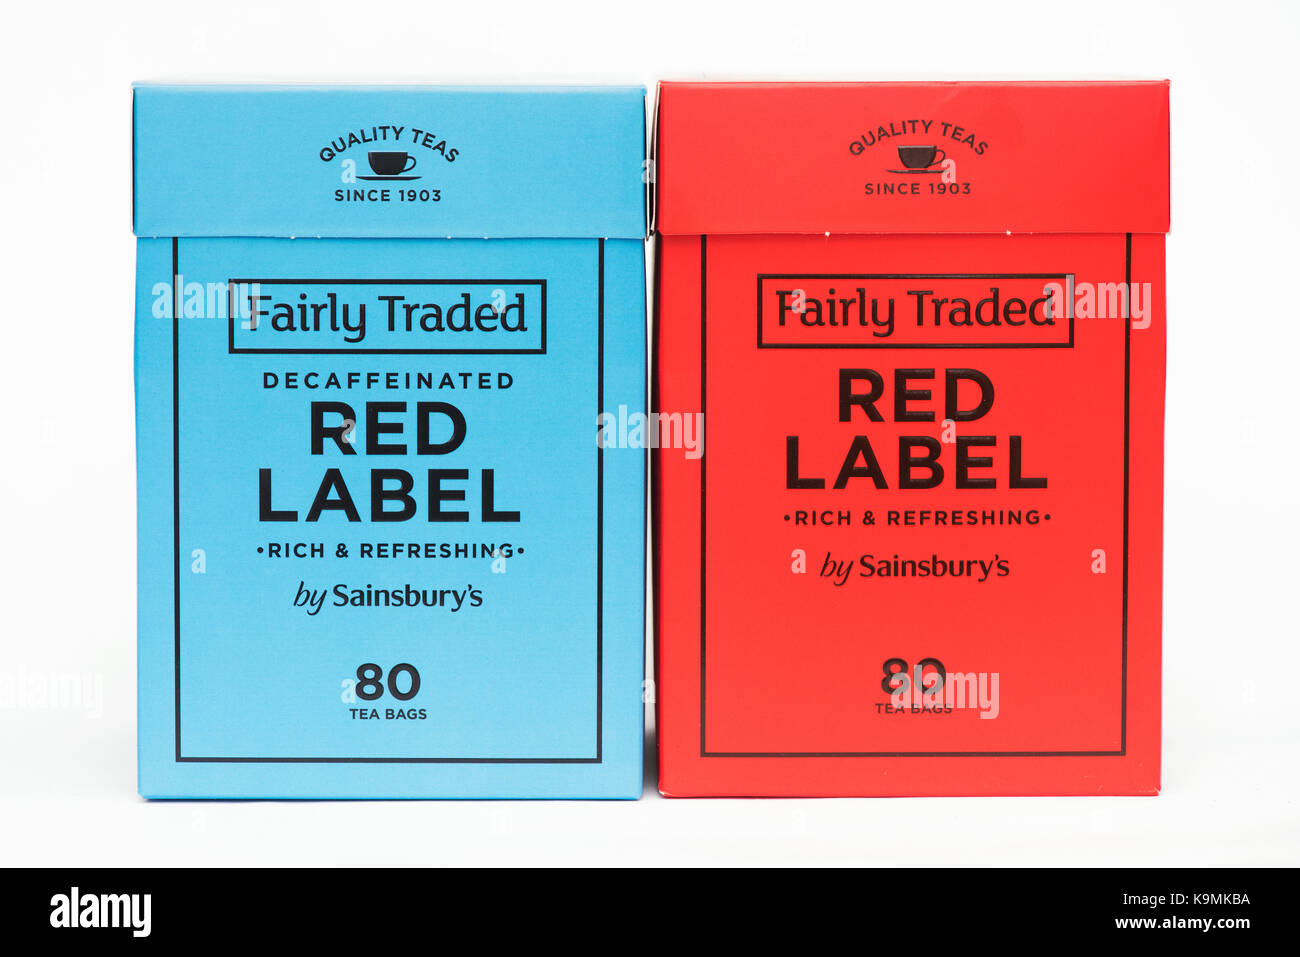 Sainsbury's de Comercio Justo té de Etiqueta Roja paquetes sobre un fondo blanco. Foto de stock